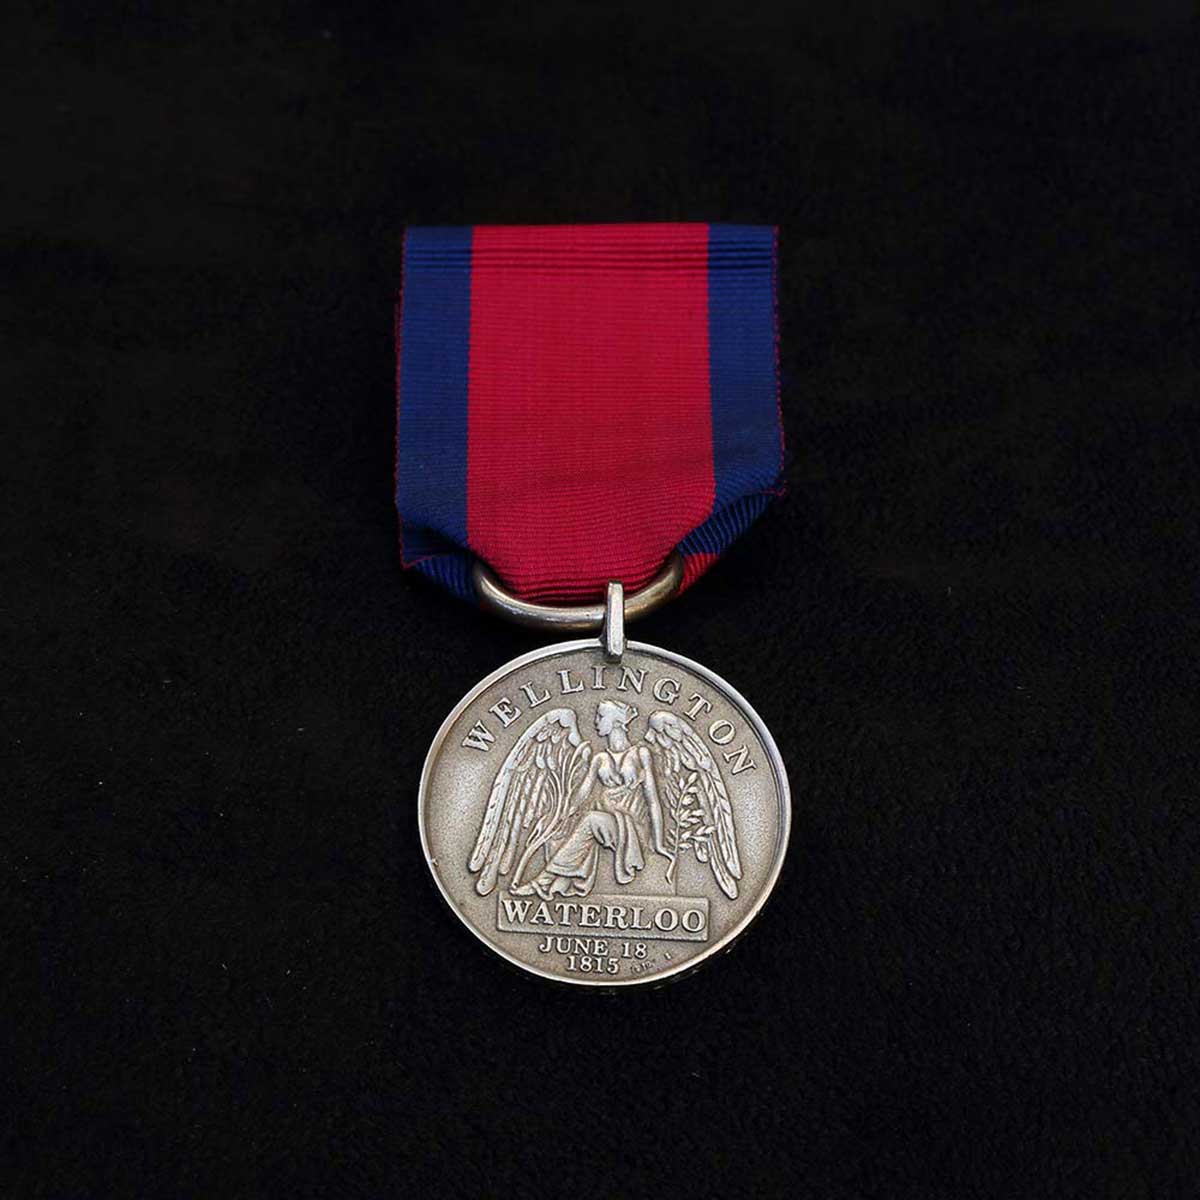 Juels Limited Militaria Medal